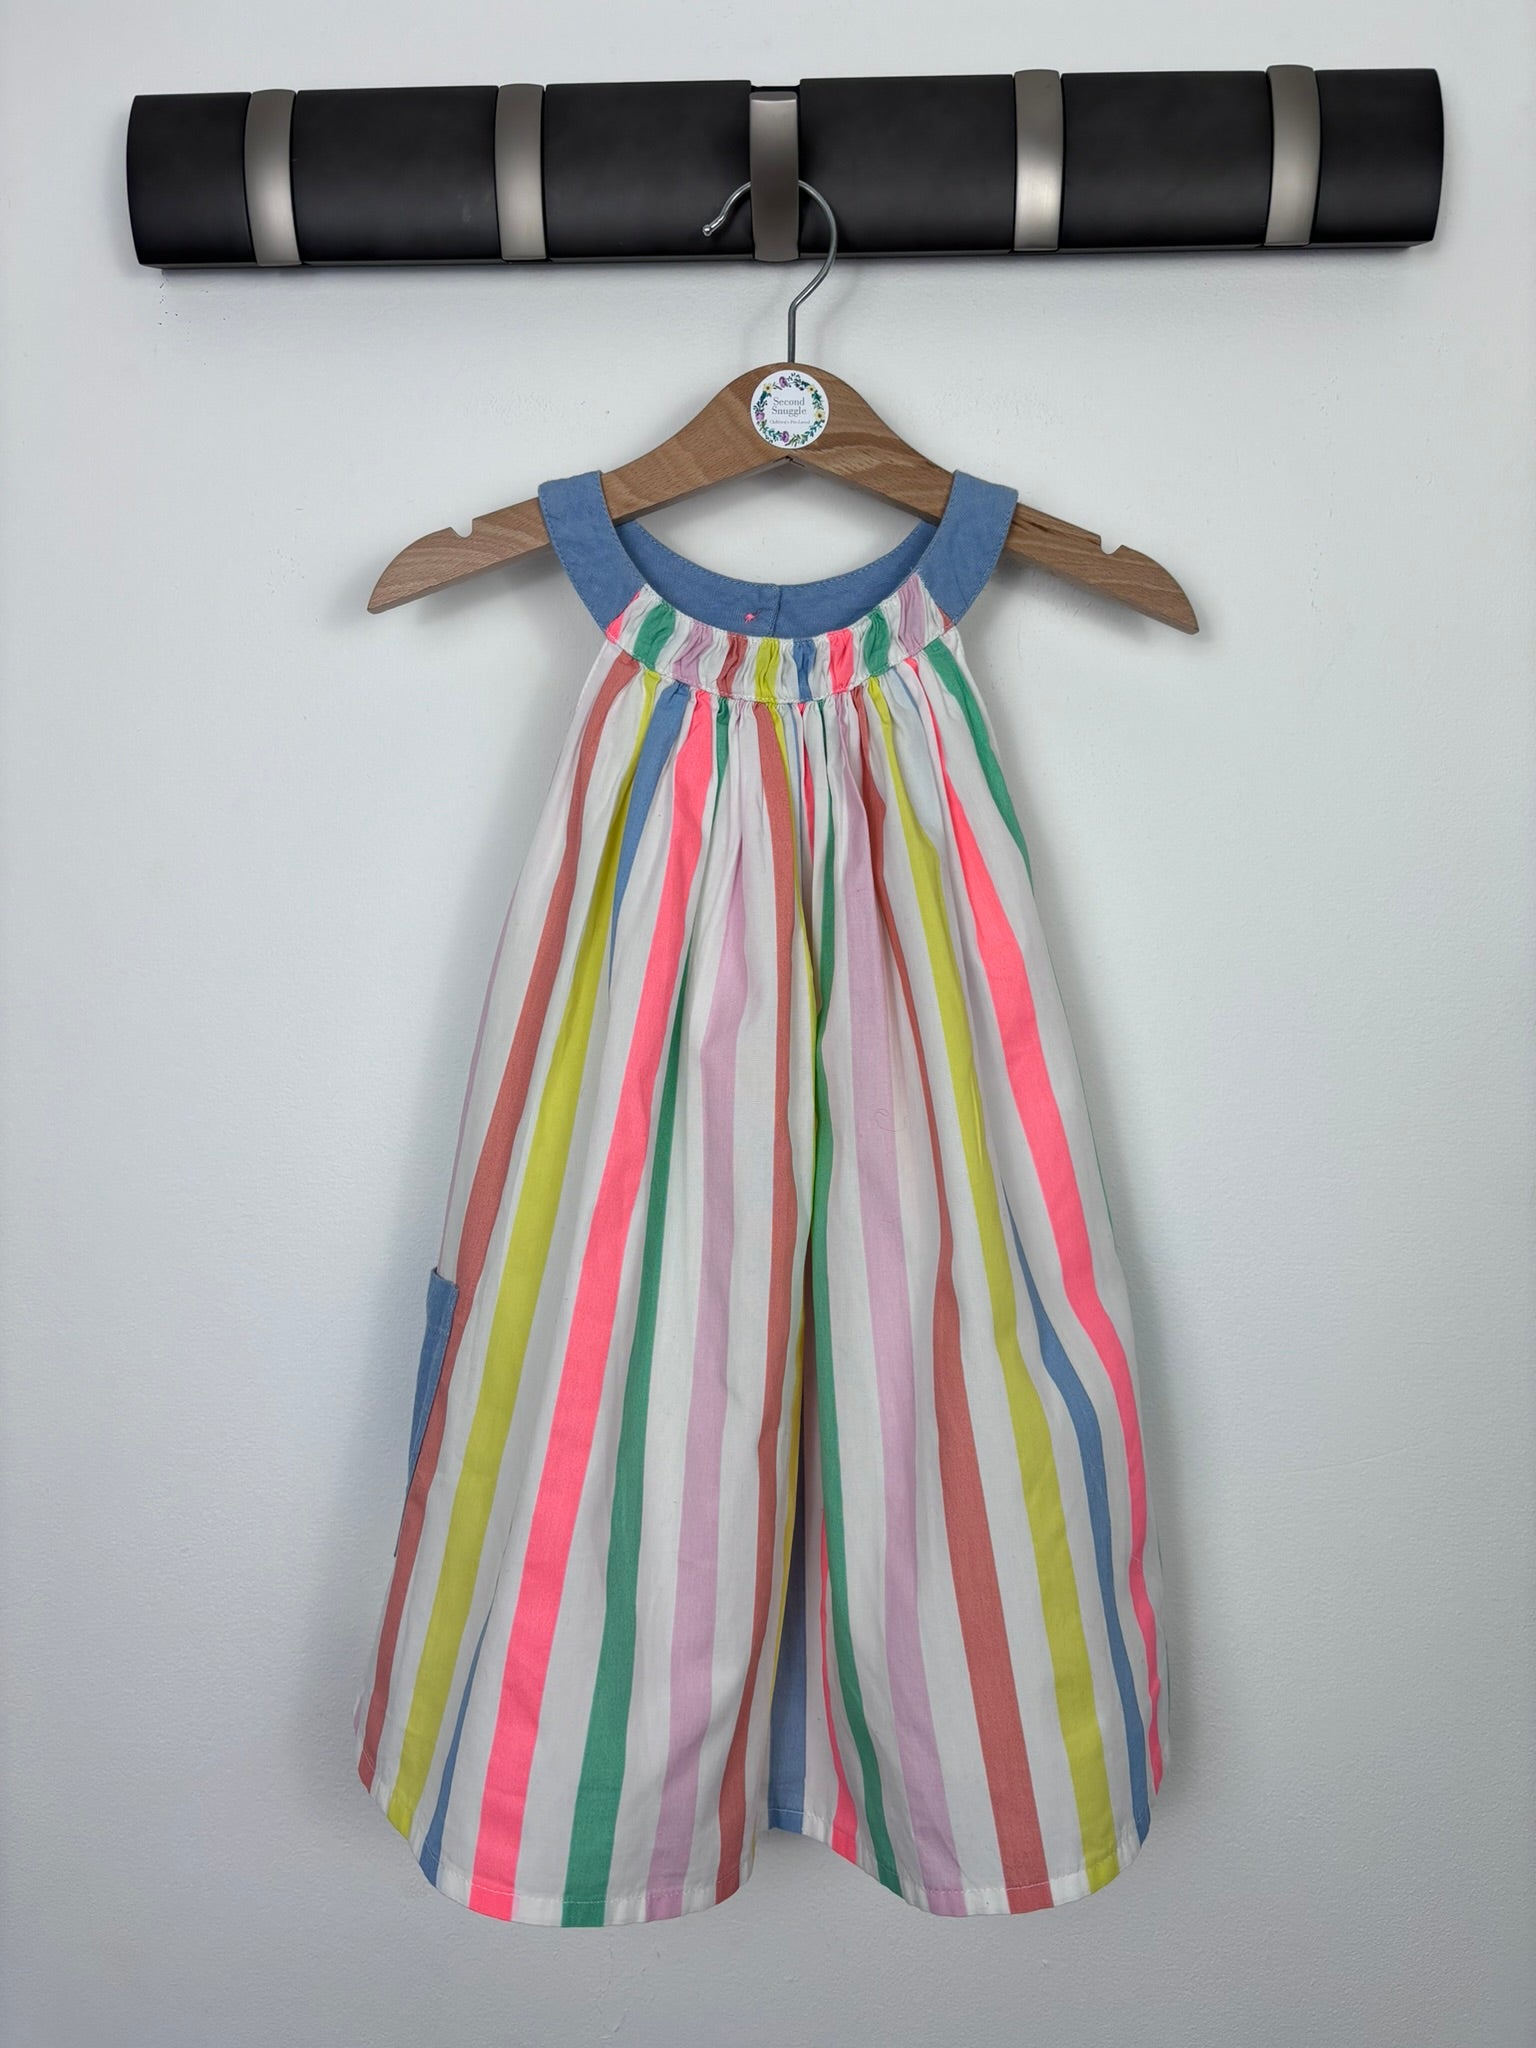 M&S 18-24 Months-Dresses-Second Snuggle Preloved